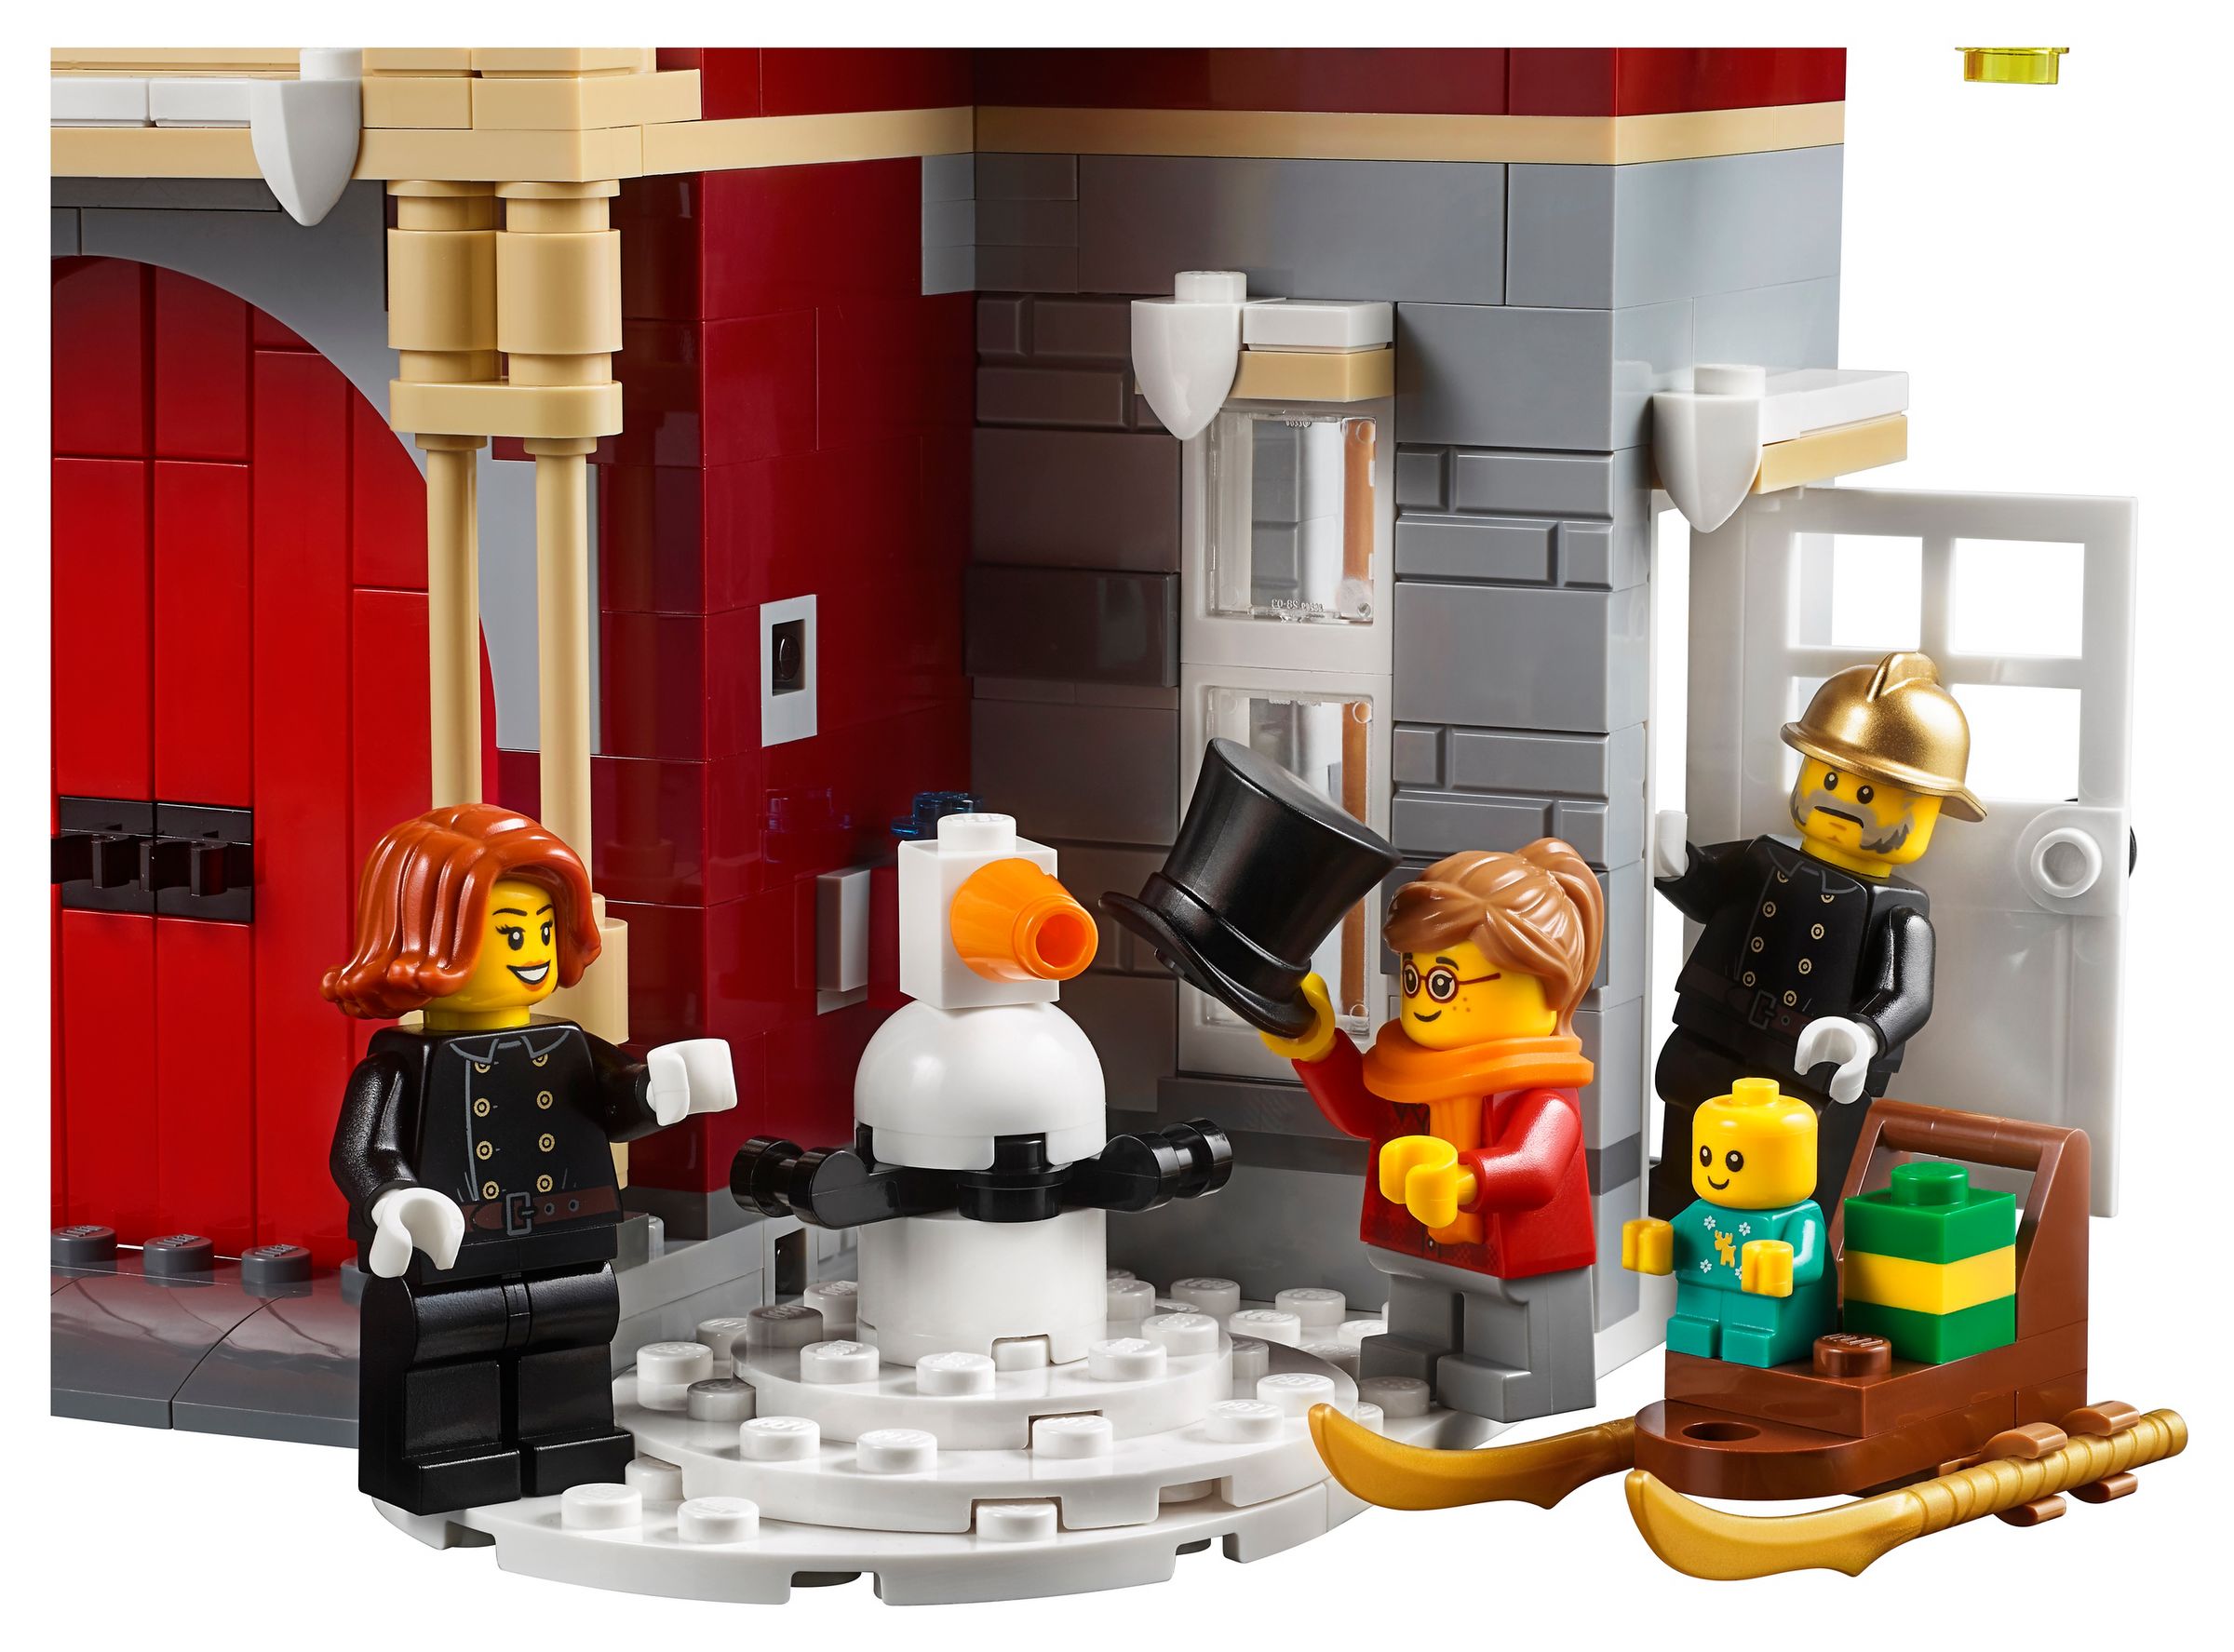 LEGO Advanced Models 10263 Winterliche Feuerwehrstation LEGO_10263_alt5.jpg